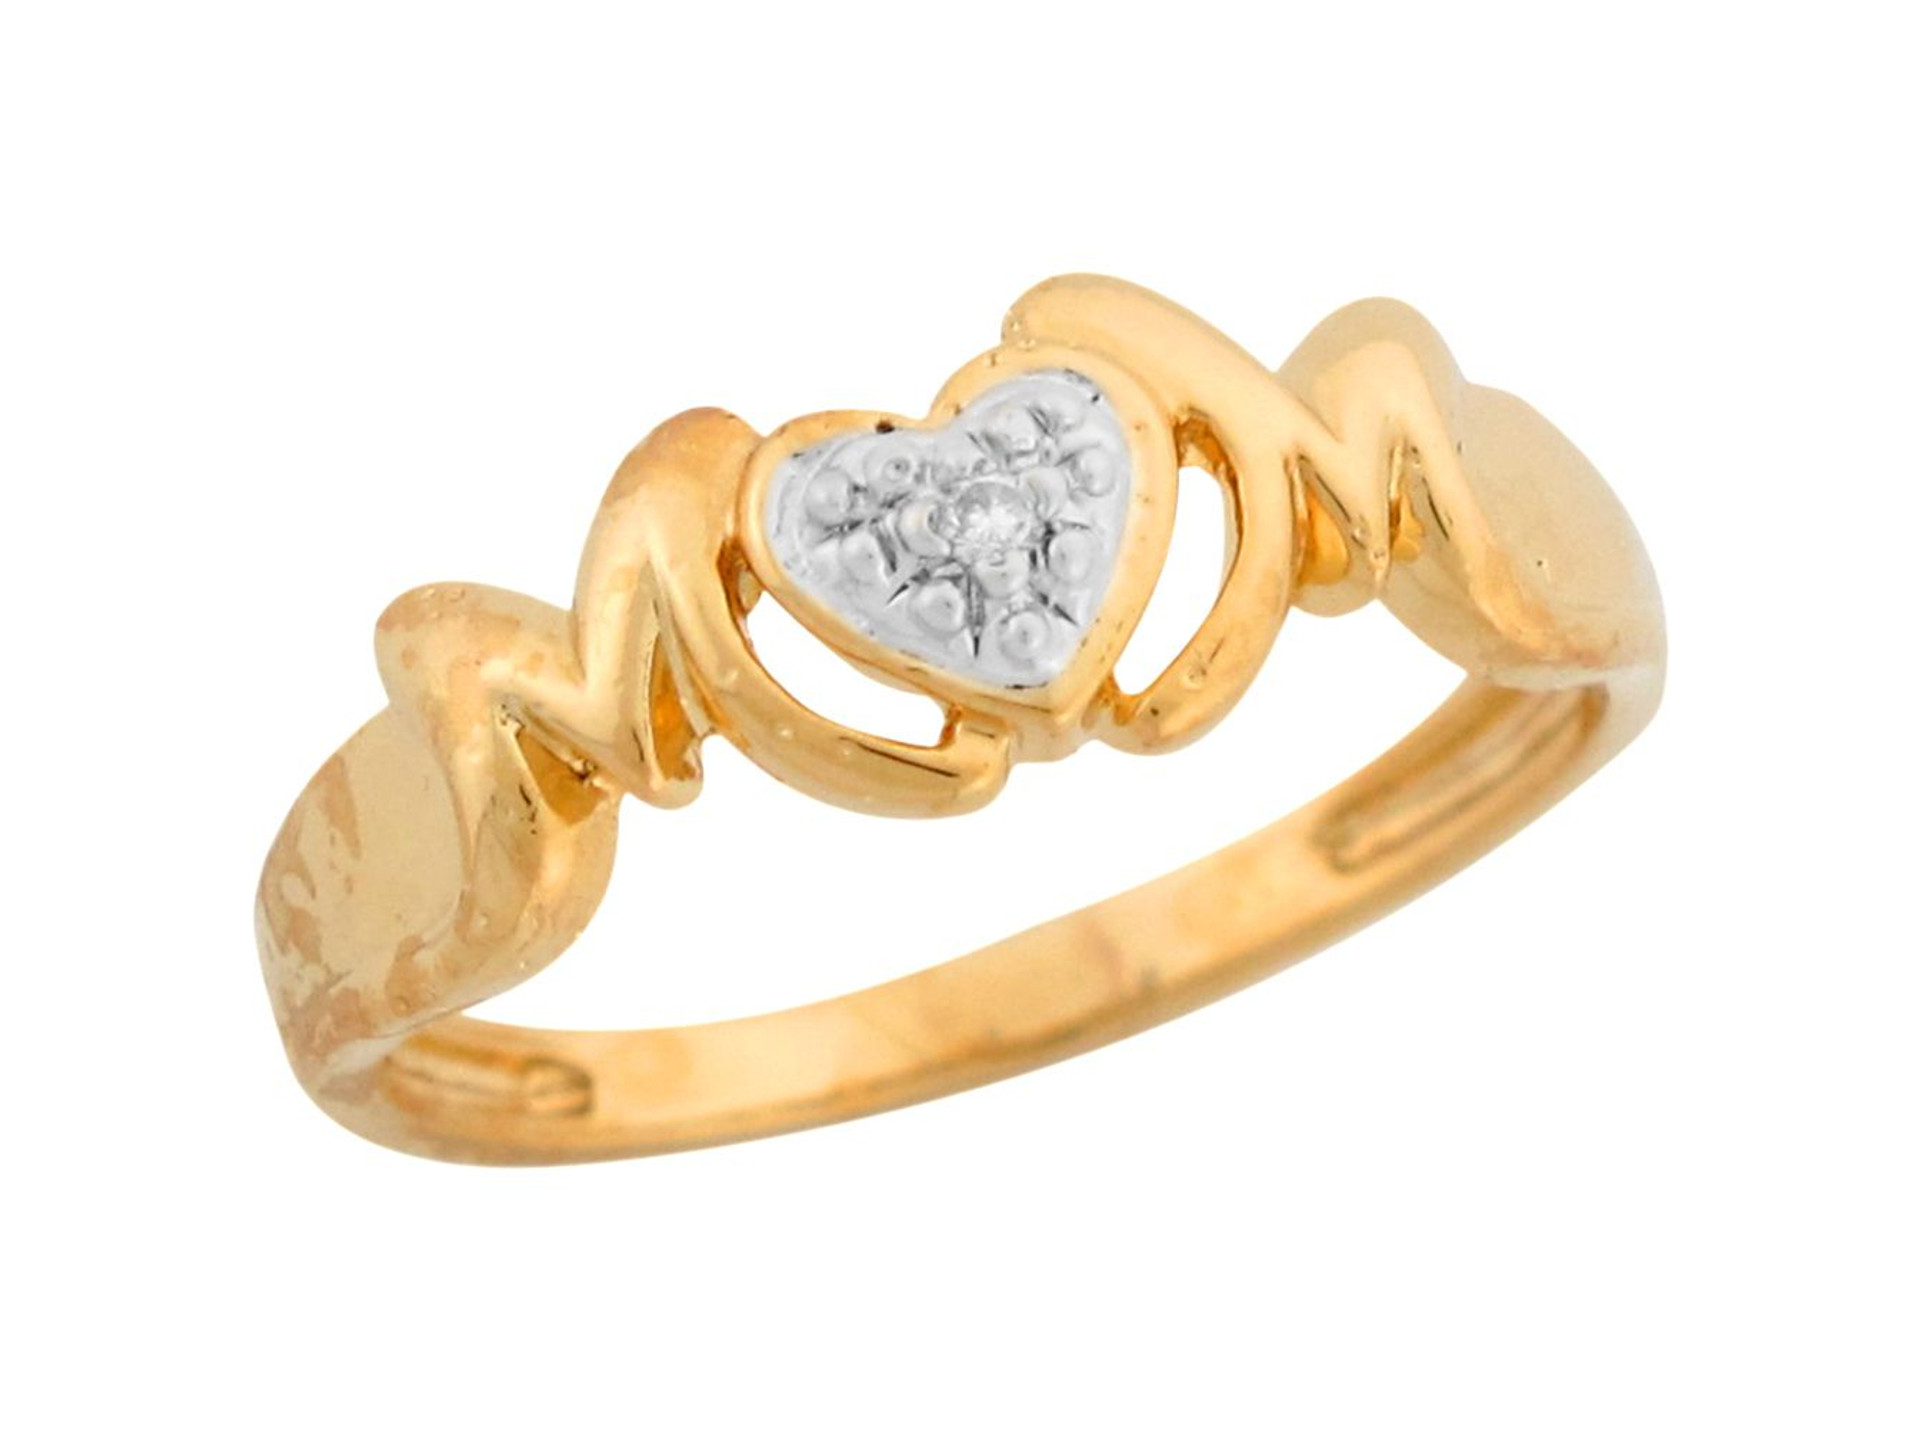 Jewelry Liquidation | Buy Inexpensive Jewelry – Initial Rings, Pendants ...